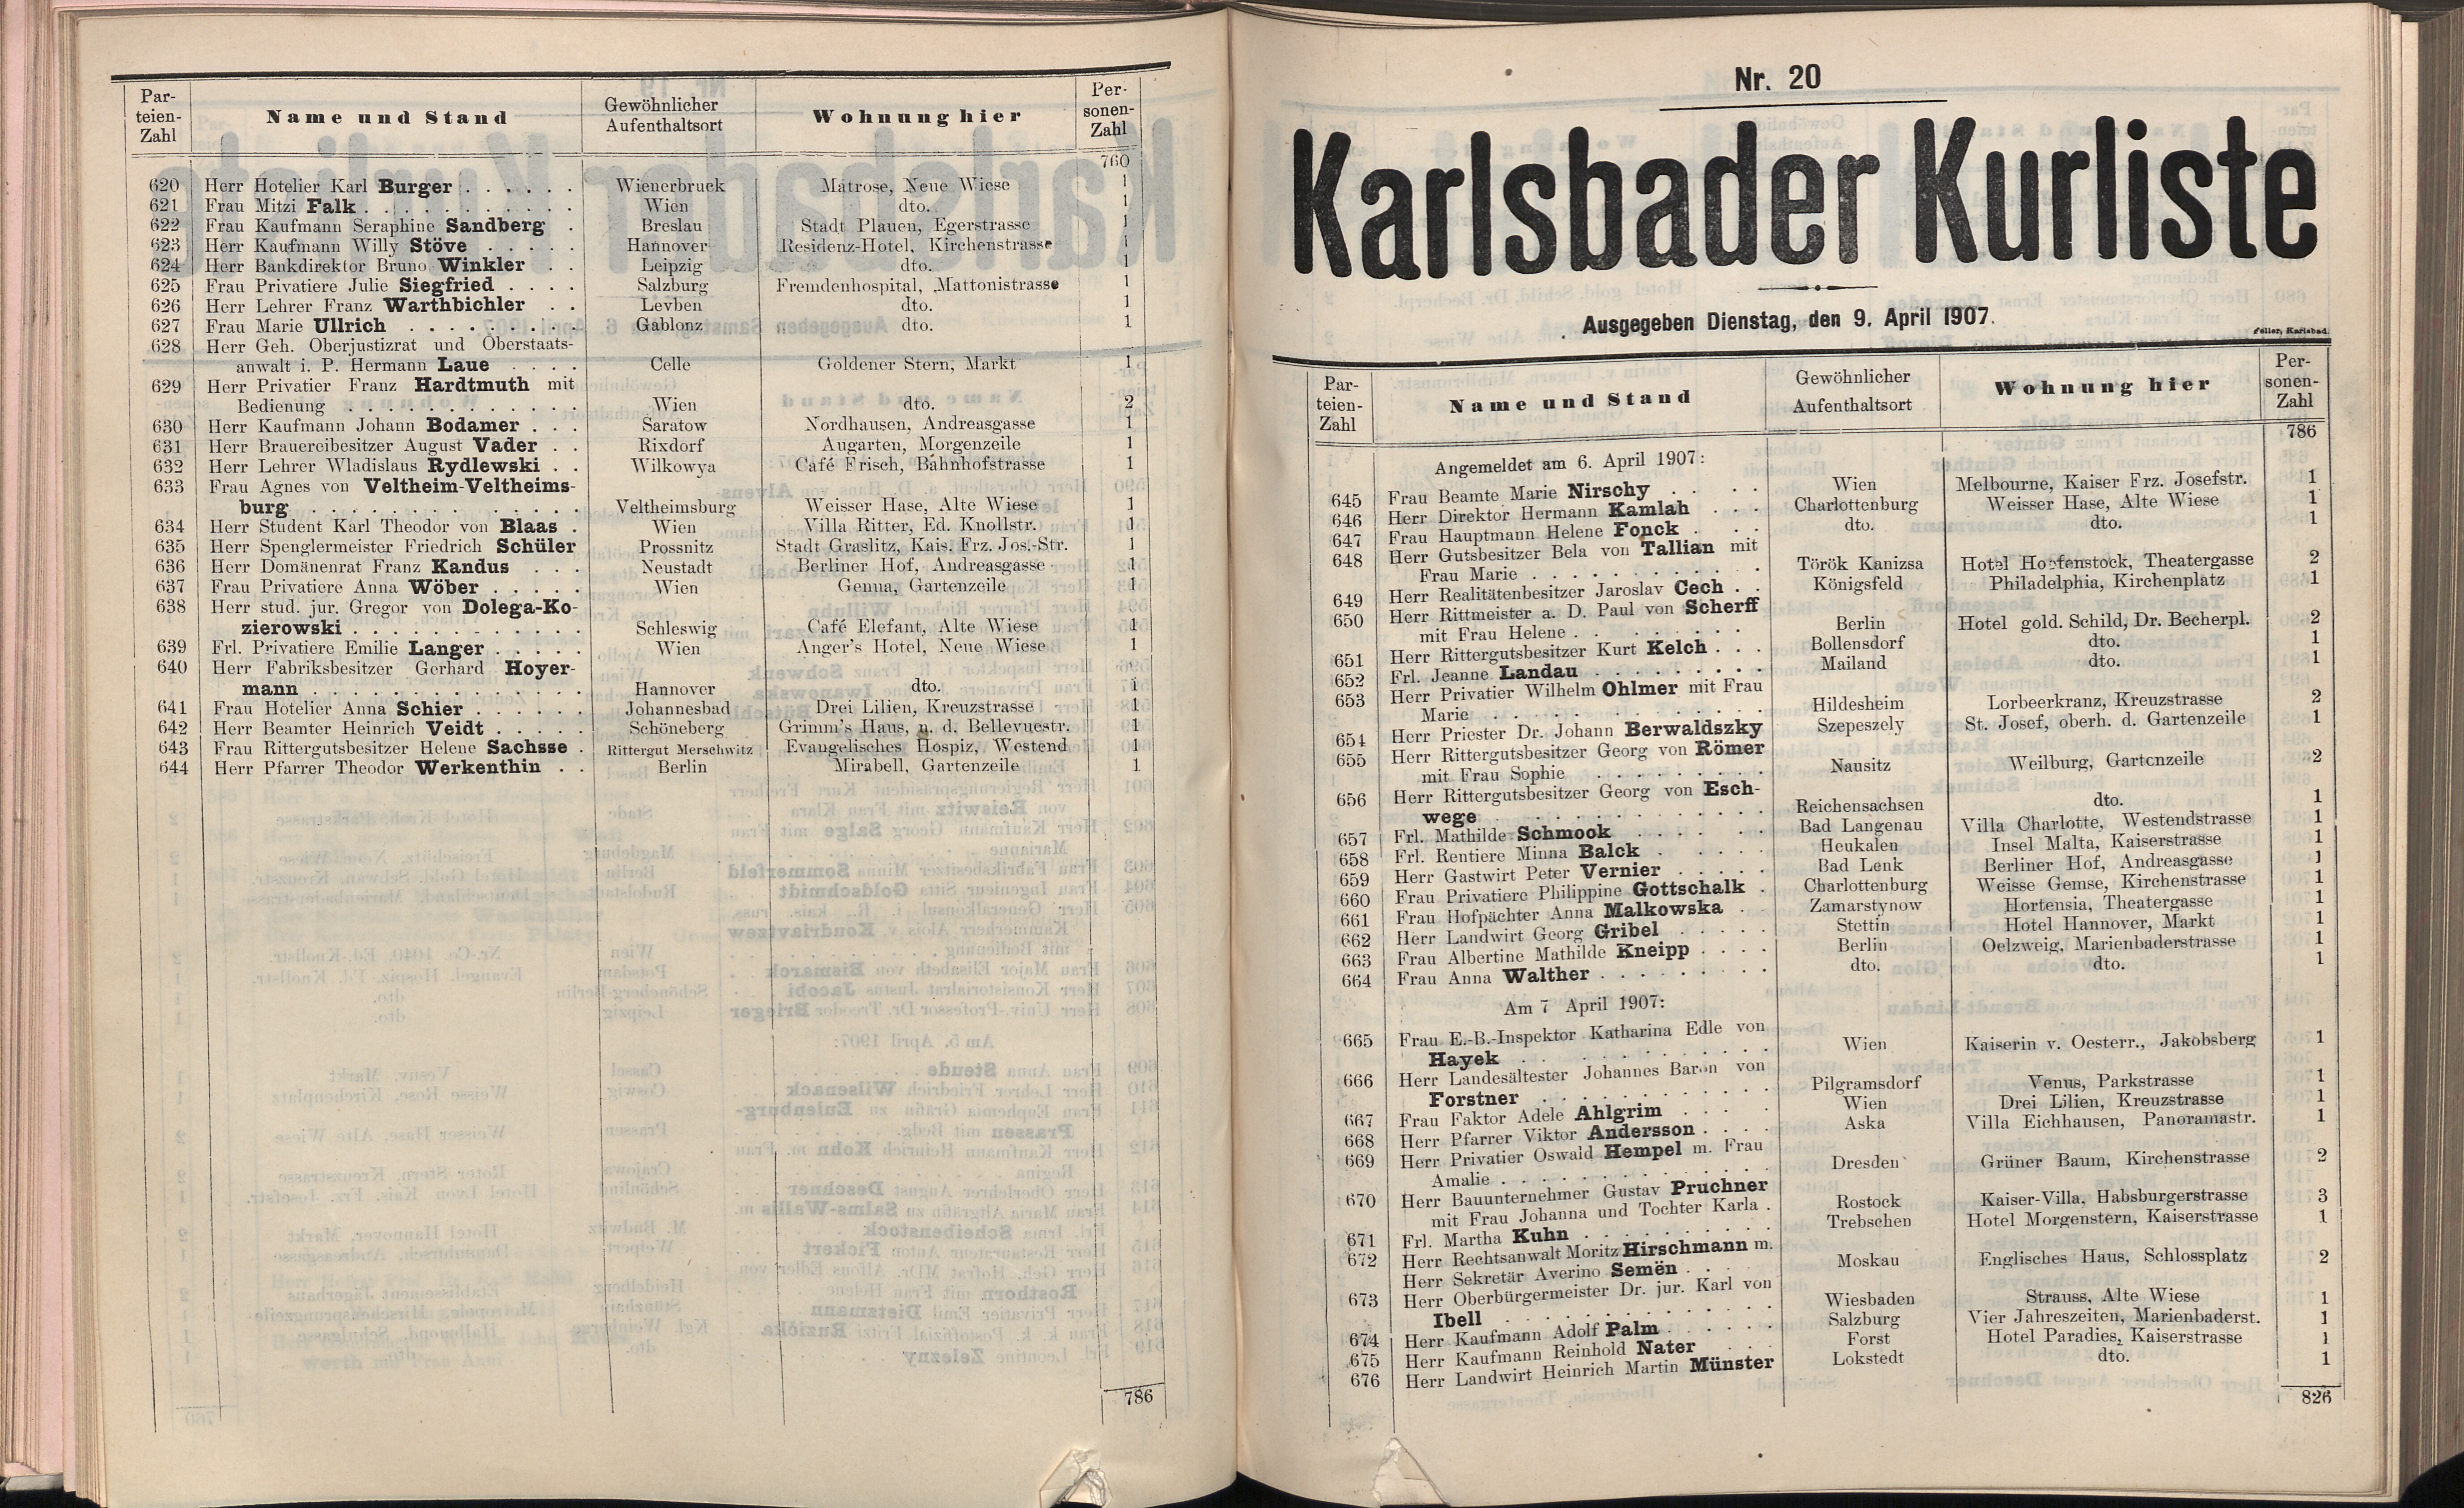 133. soap-kv_knihovna_karlsbader-kurliste-1907_1340